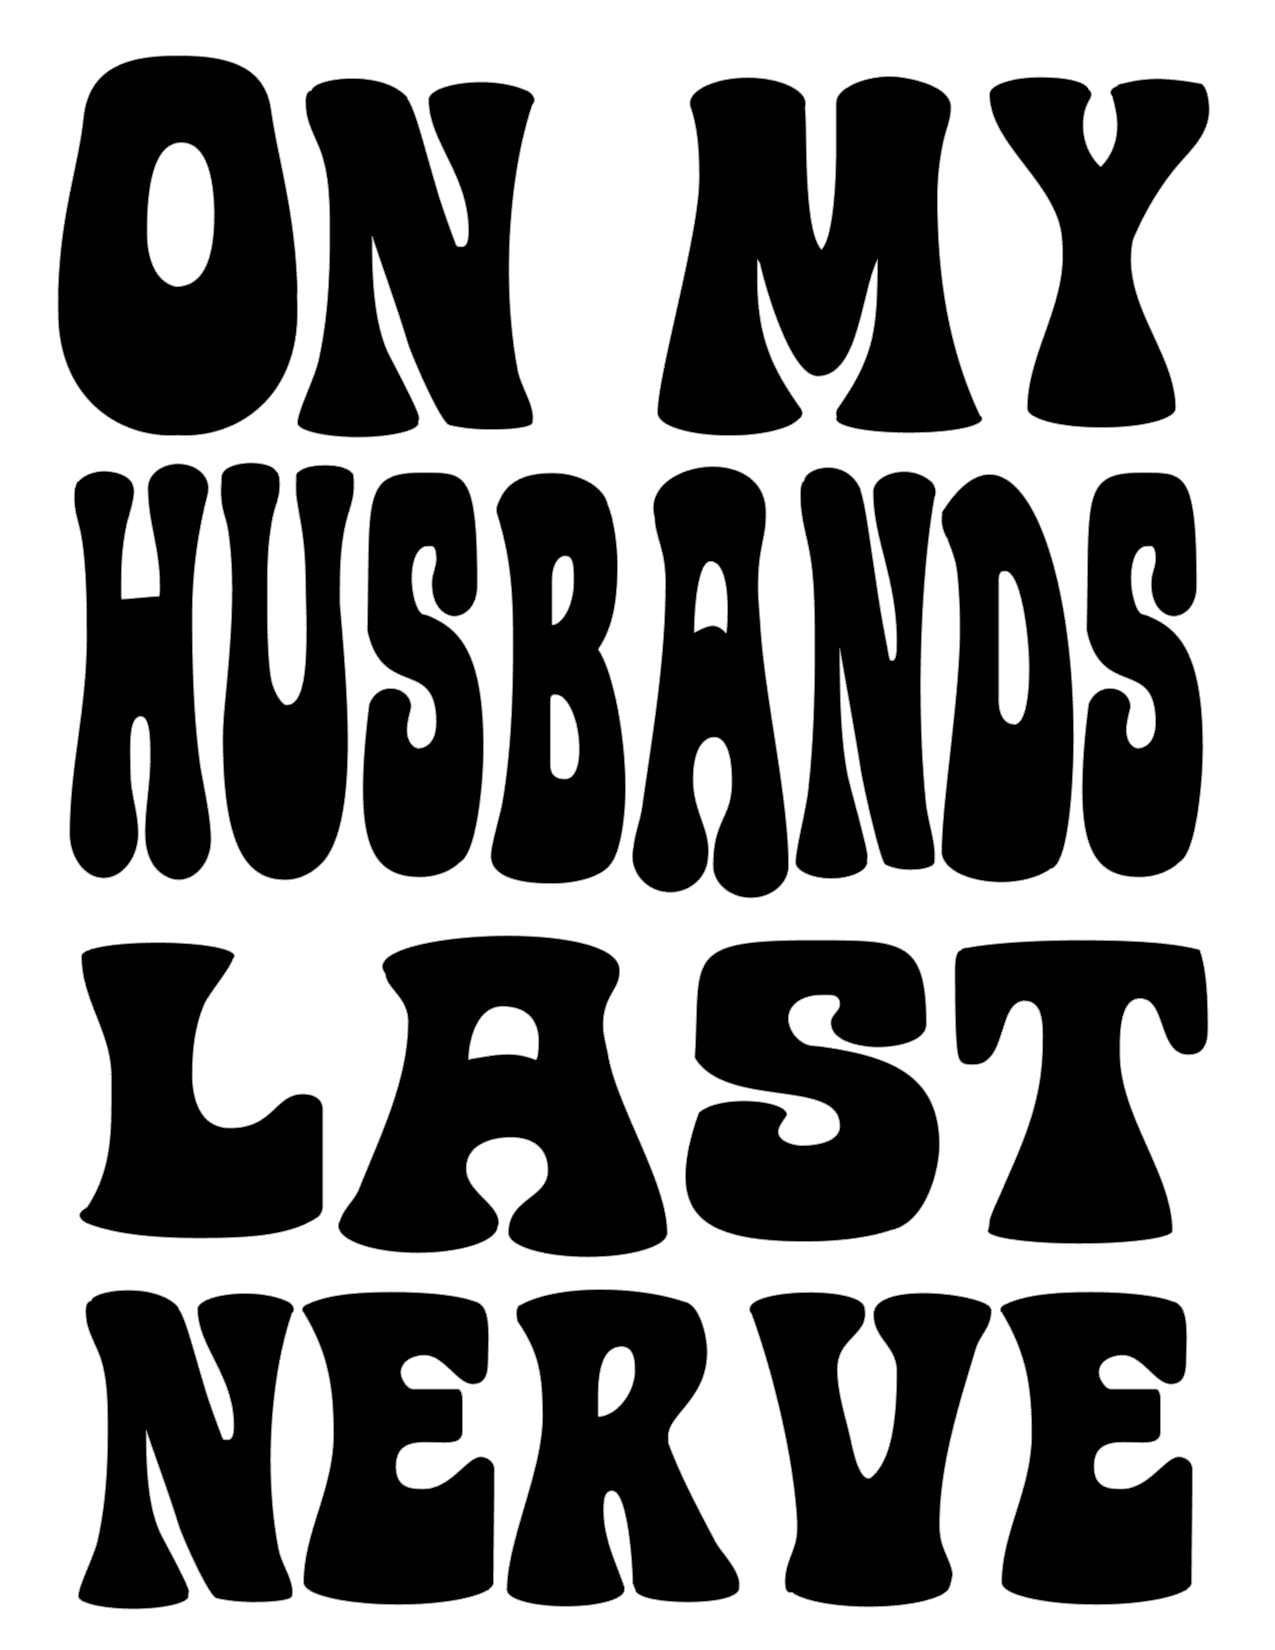 #316 On my Husbands last nerve